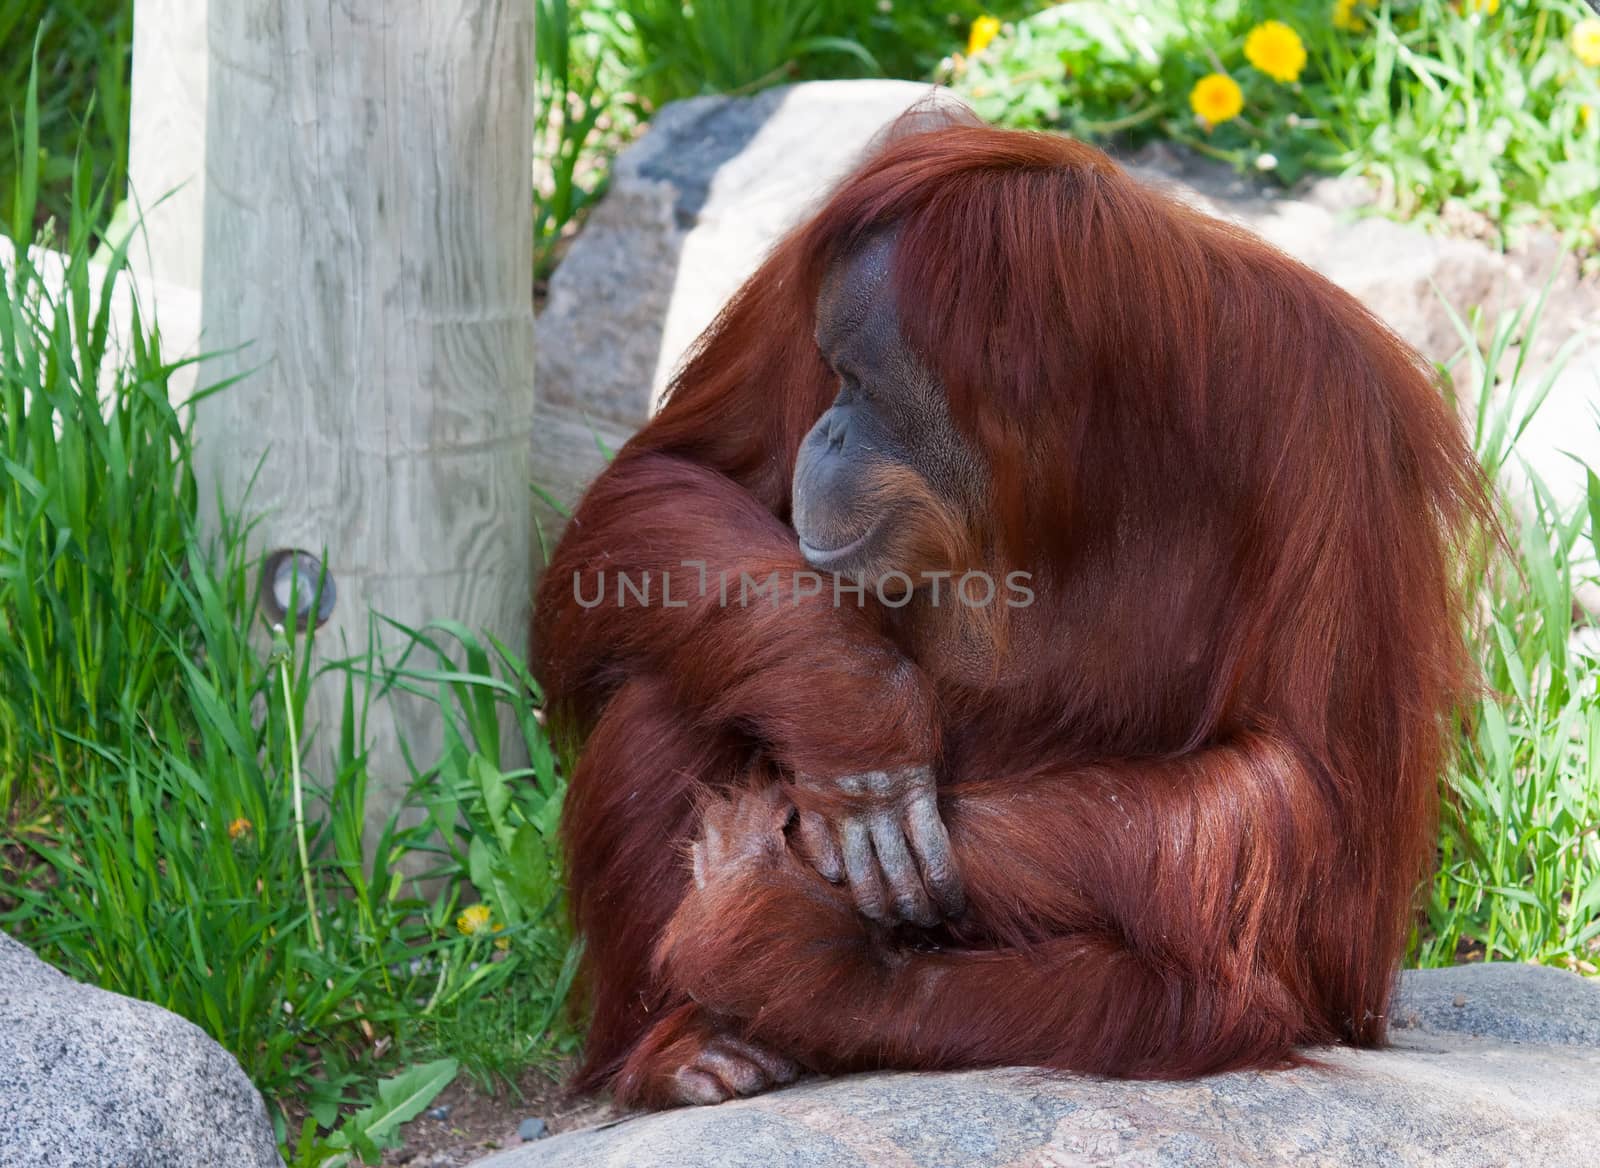 Orangutan (Pongo pygmaeus) portrait sitting on a rock